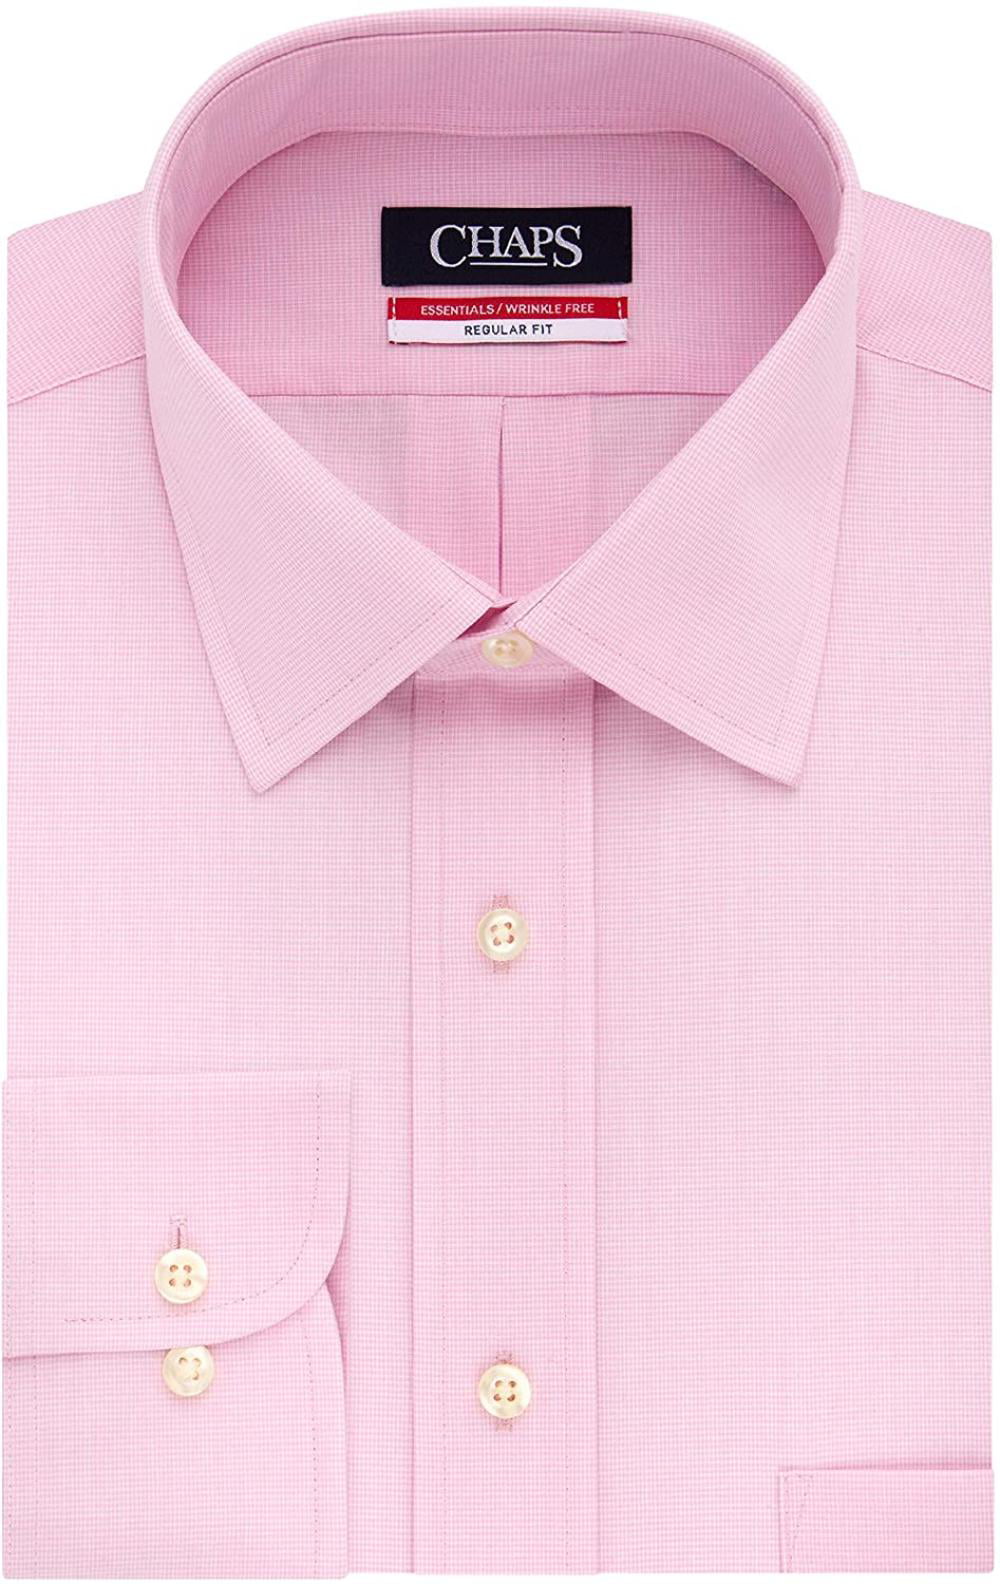 Mens Slim Fit Pink & White Checkered Spread Collar Cotton Blend Dress Shirt 